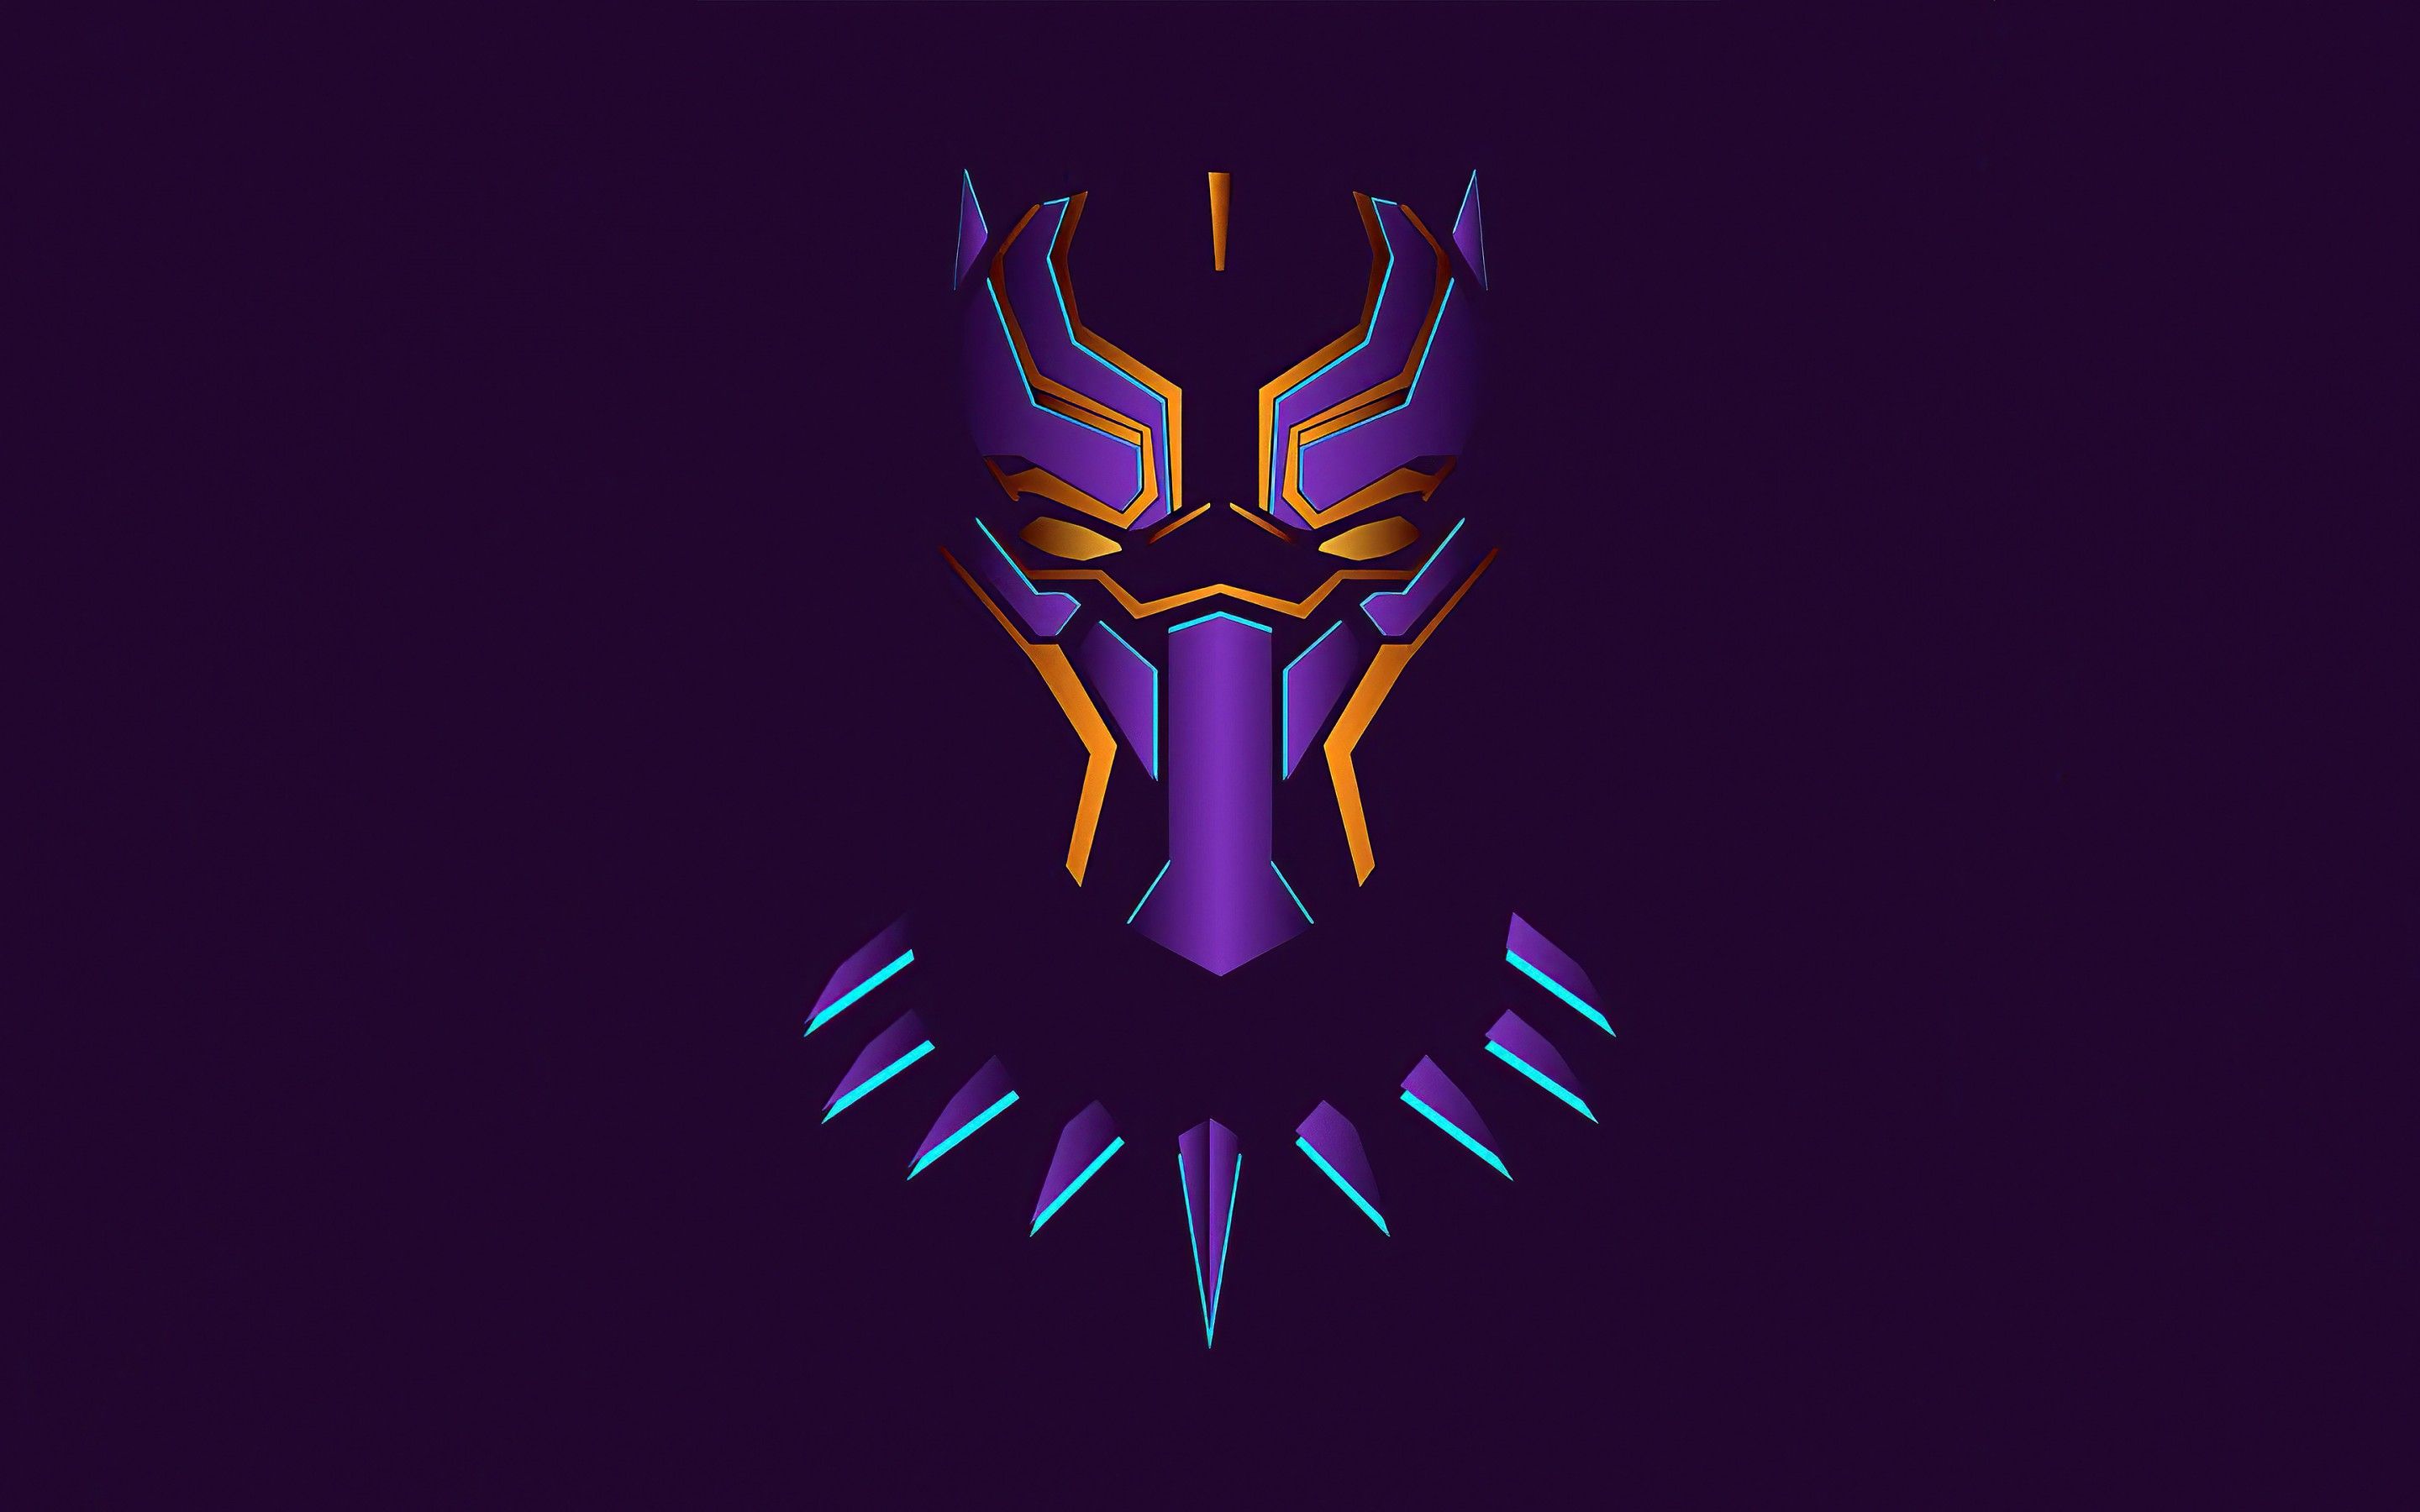 Black Panther 4K Wallpaper, Purple background, Minimal art, Graphics CGI